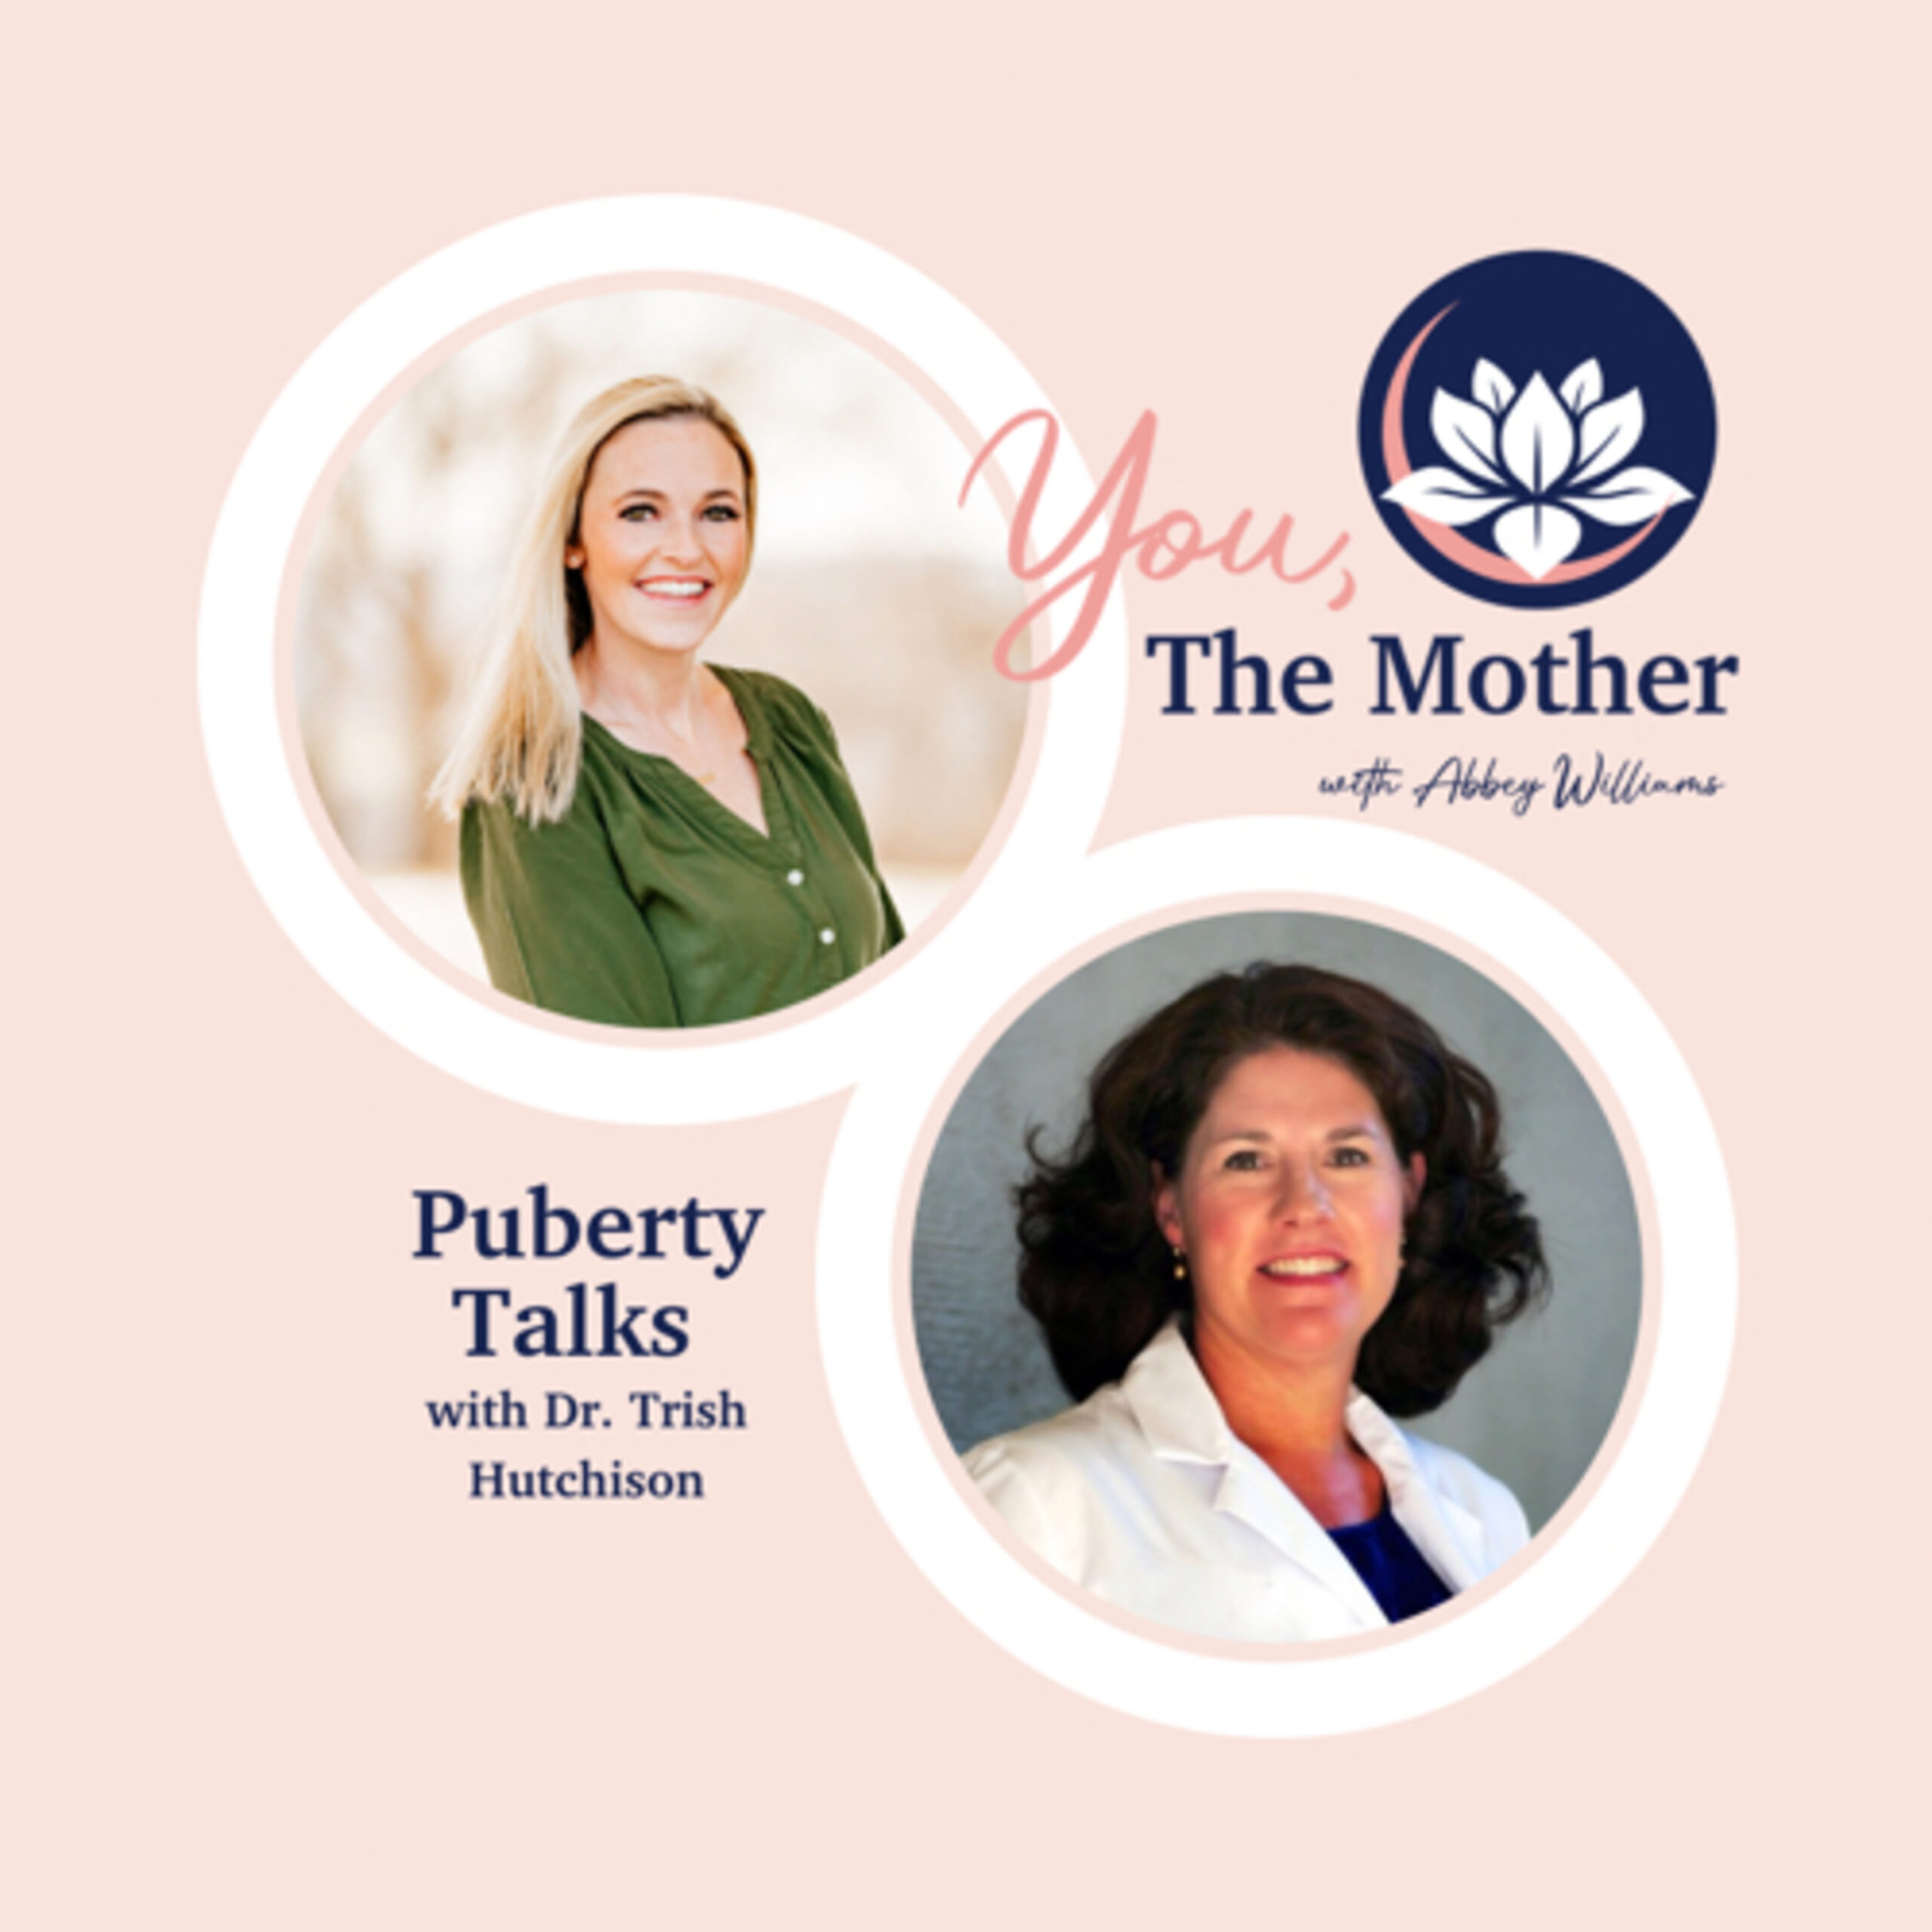 Puberty Talks with Dr. Trish Hutchison